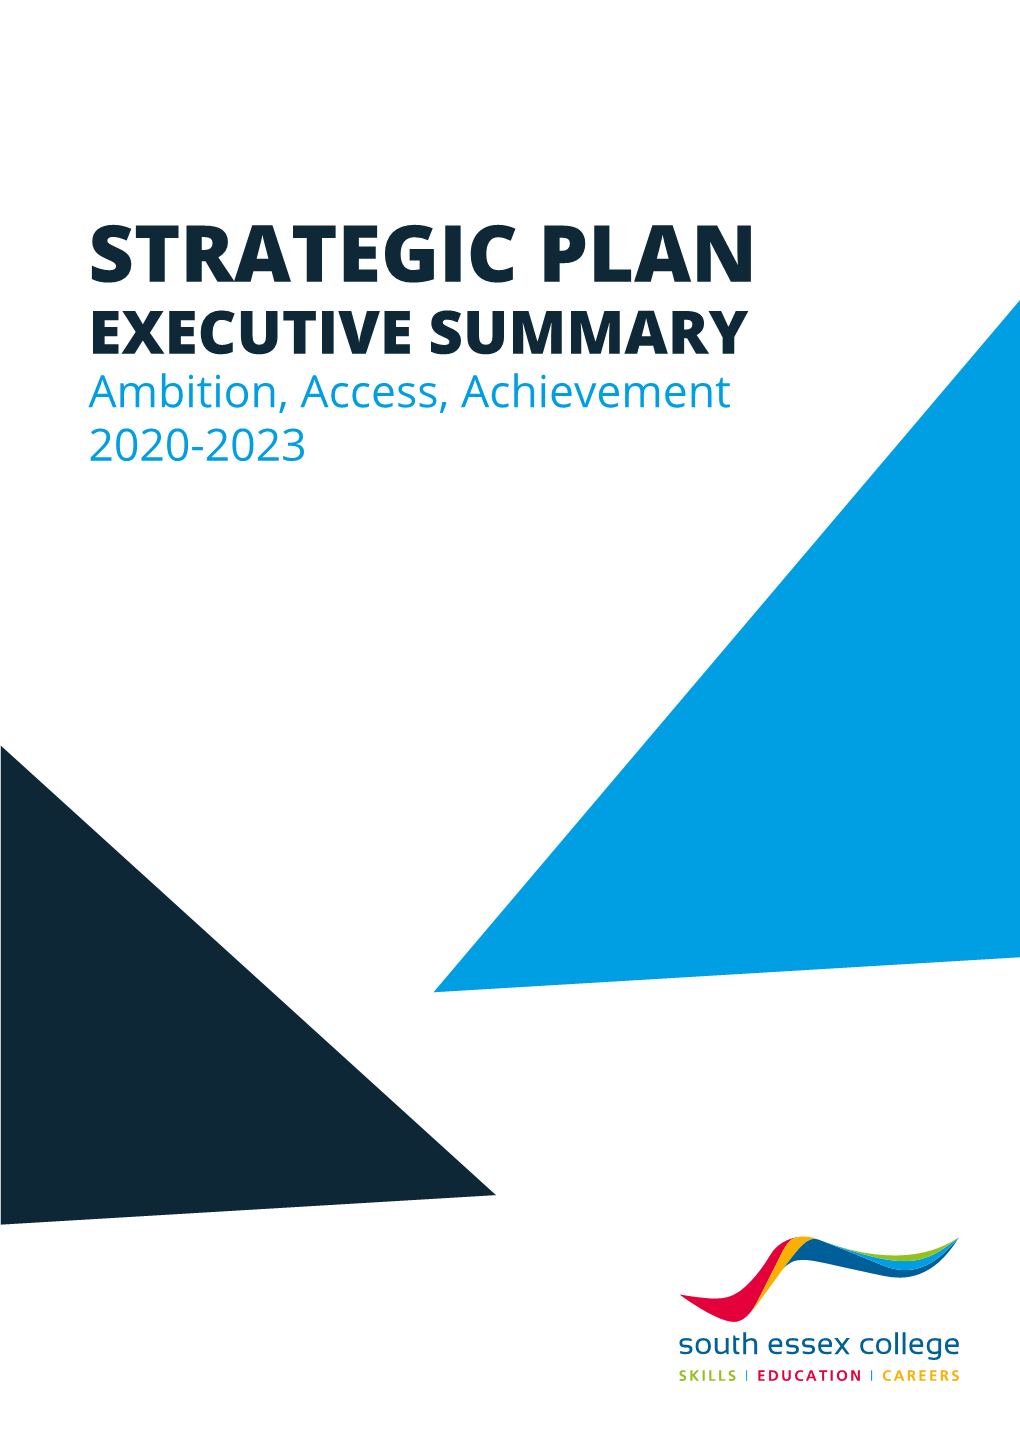 STRATEGIC PLAN EXECUTIVE SUMMARY Ambition, Access, Achievement 2020-2023 10,000 STUDENTS